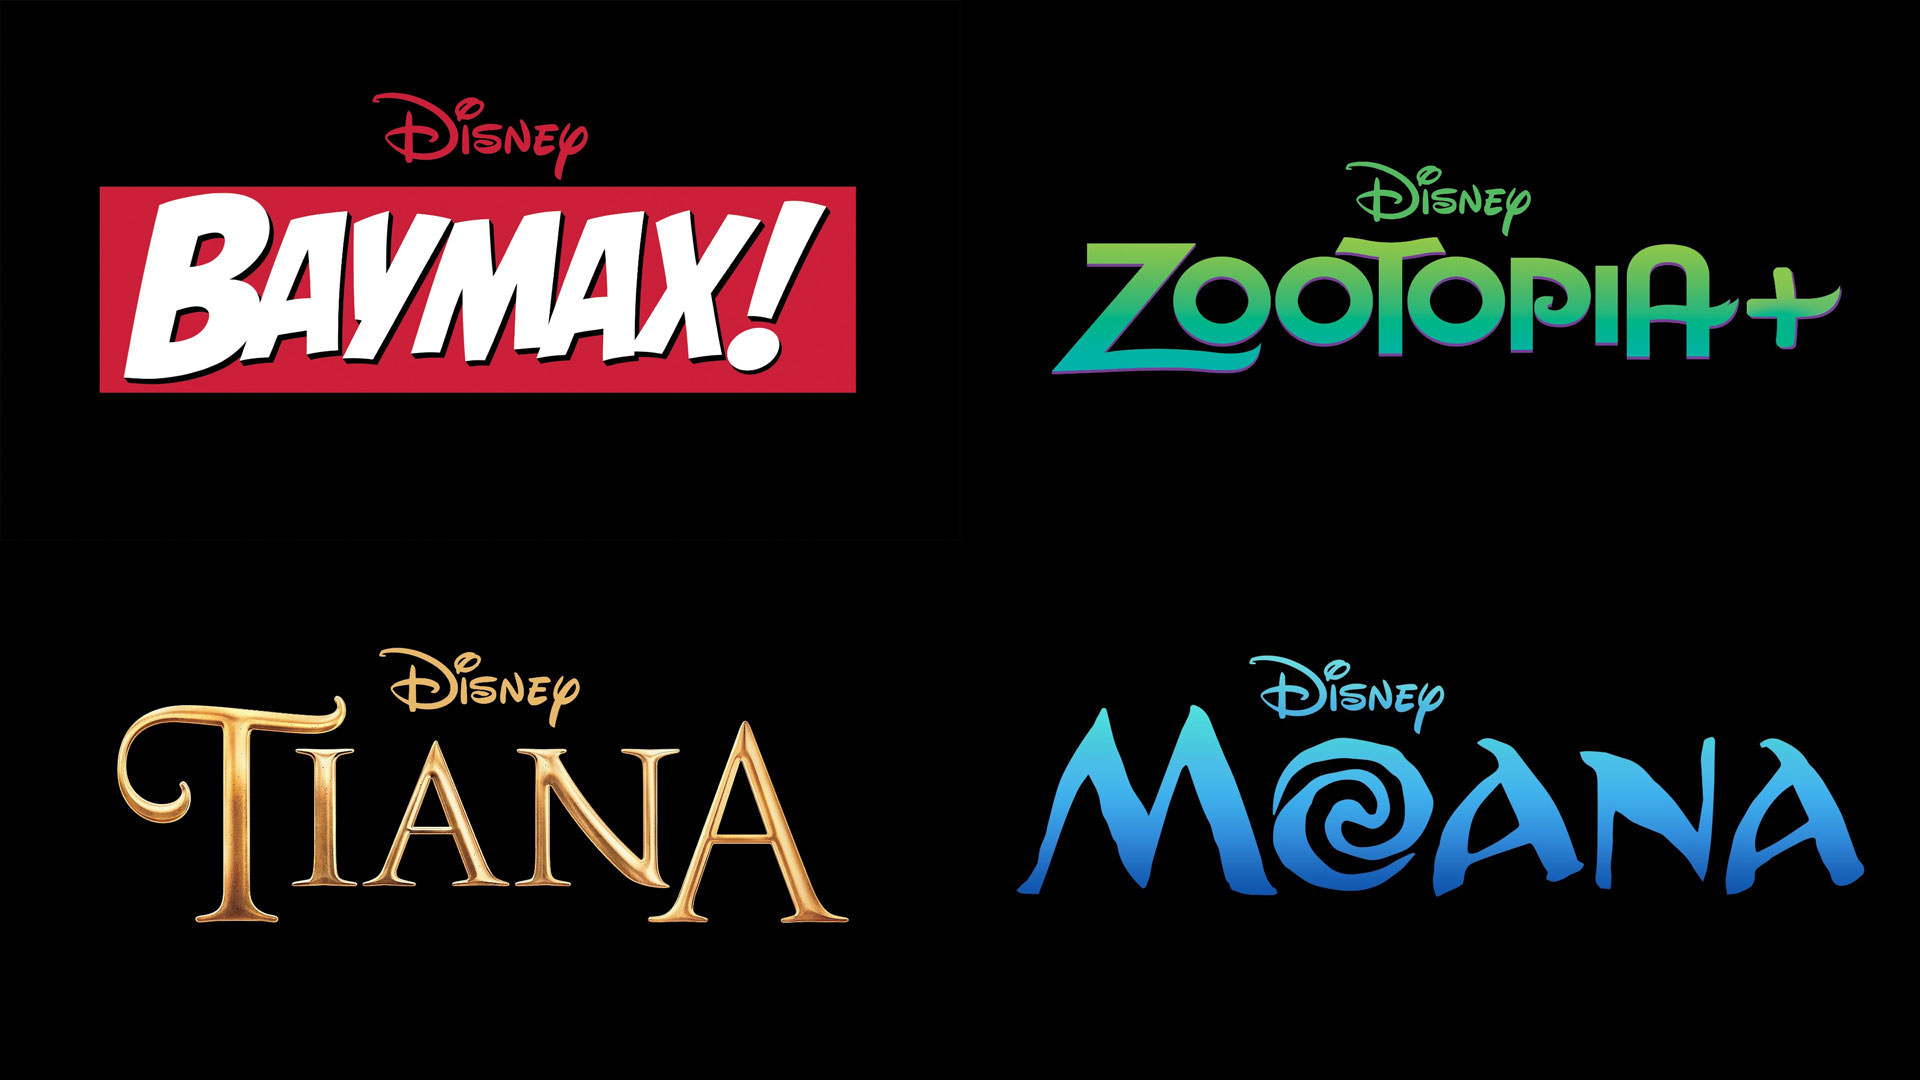 چهار لوگو رنگارنگ انیمیشن های سریالی جدید دیزنی؛ بیمکس، زوتوپیا، موانا و تیانا